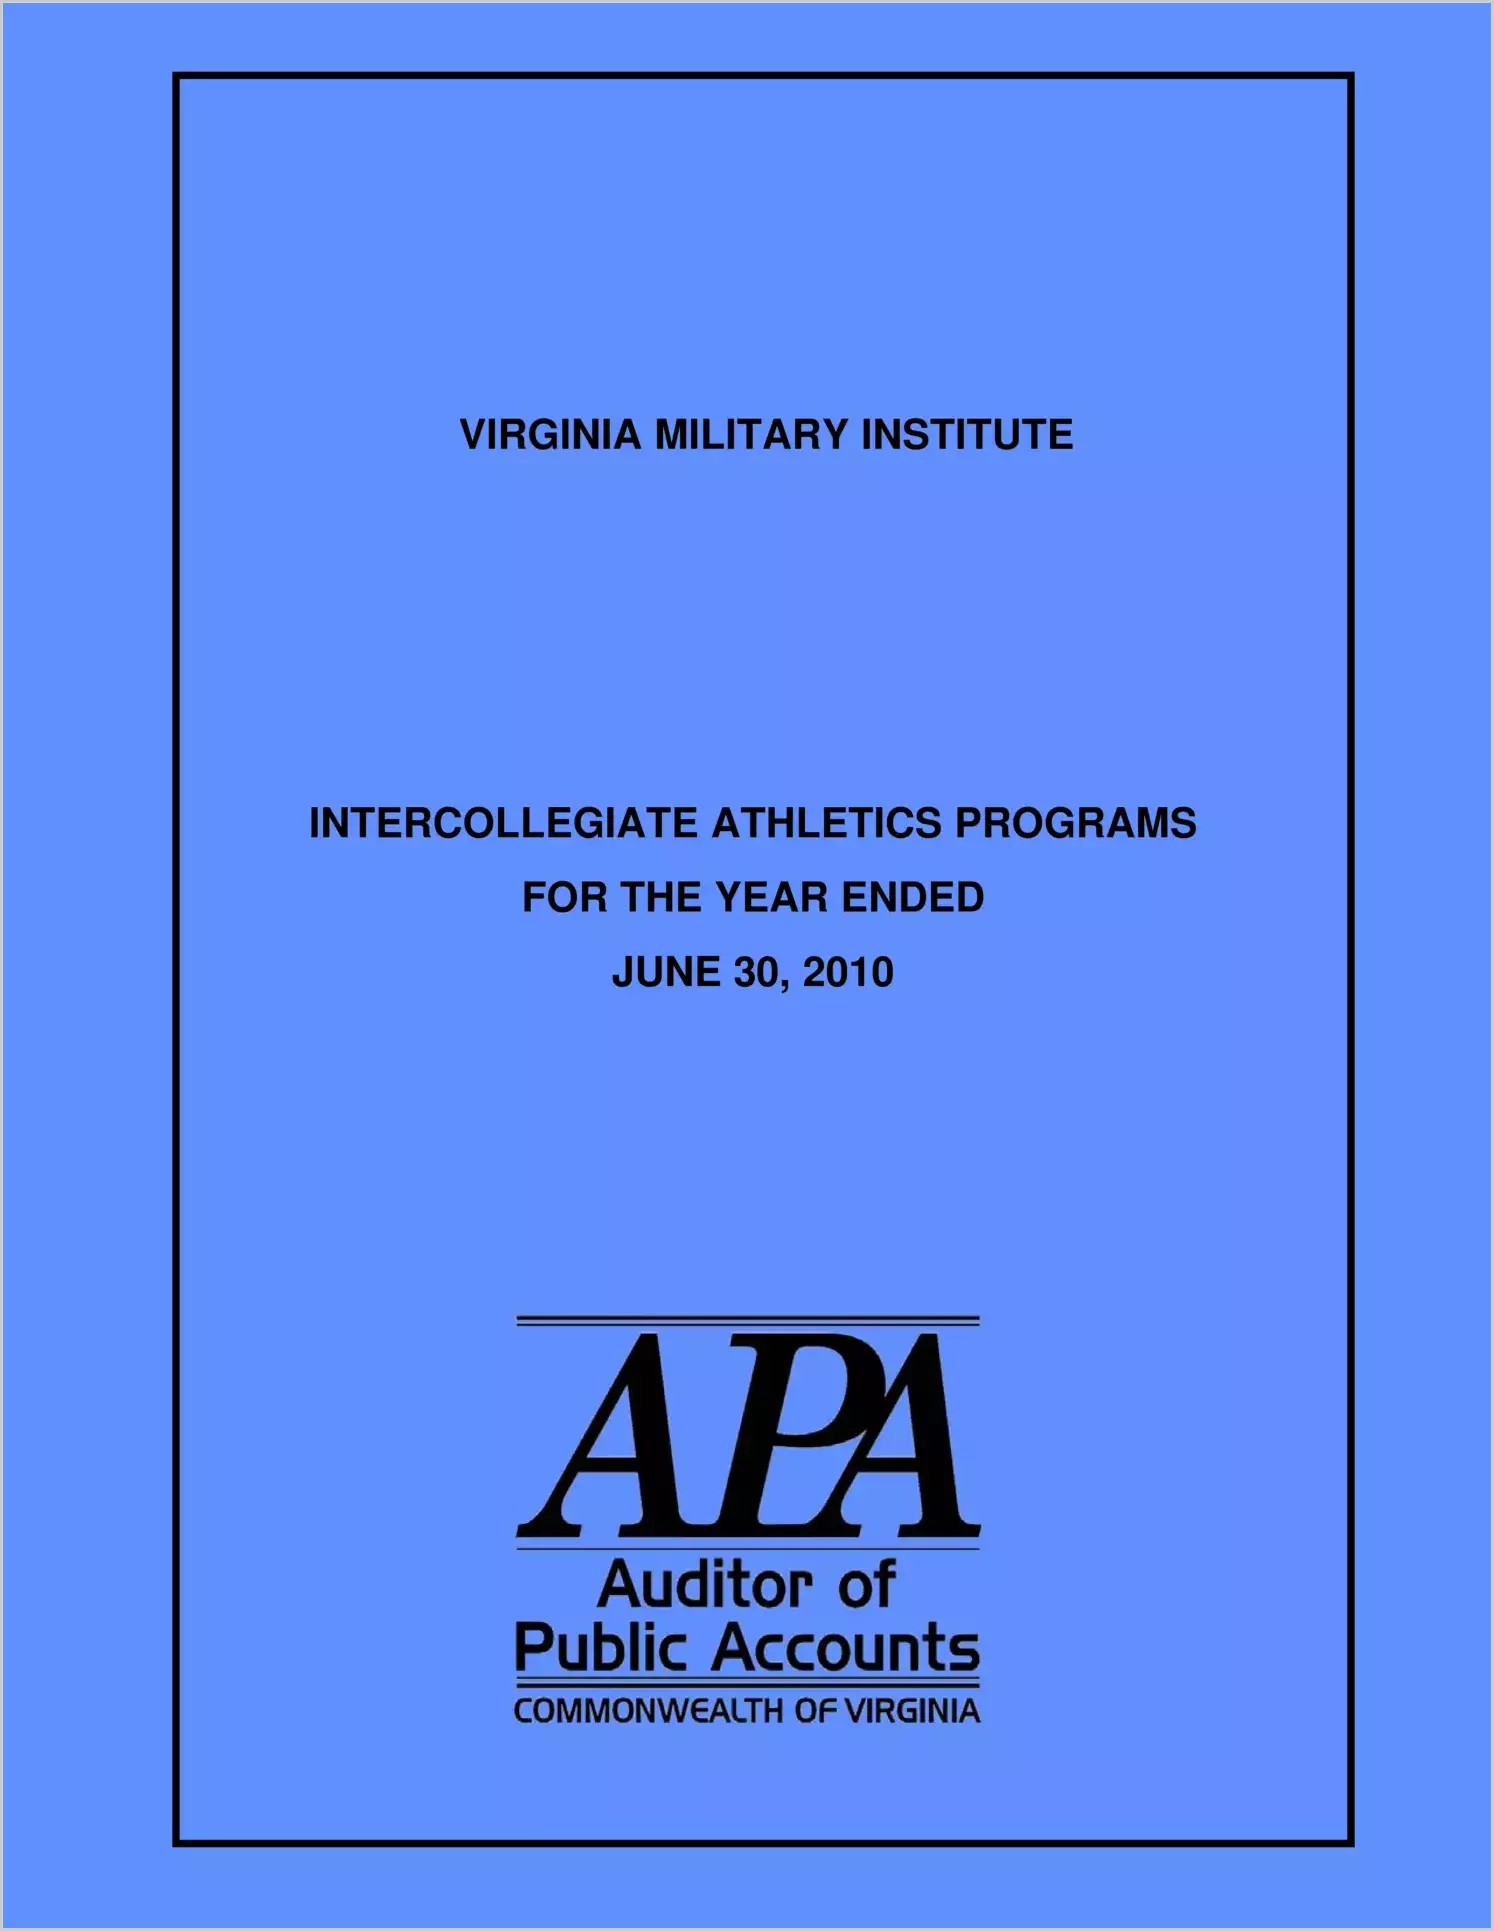 Virginia Military Institute Intercollegiate Athletics Programs for the year ended June 30, 2010